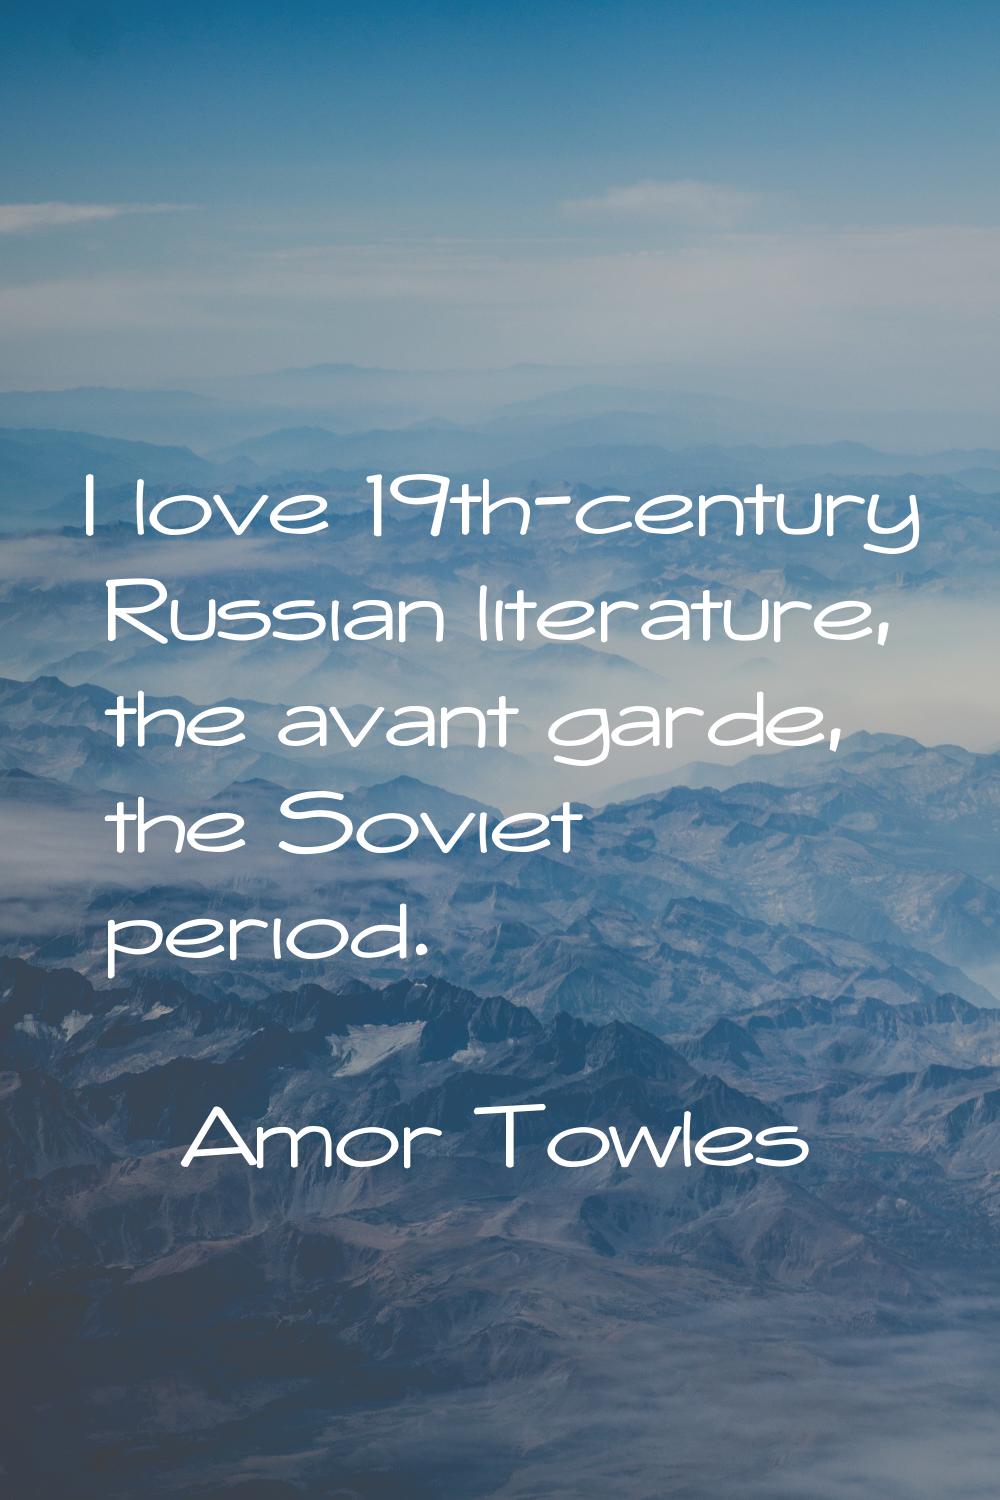 I love 19th-century Russian literature, the avant garde, the Soviet period.